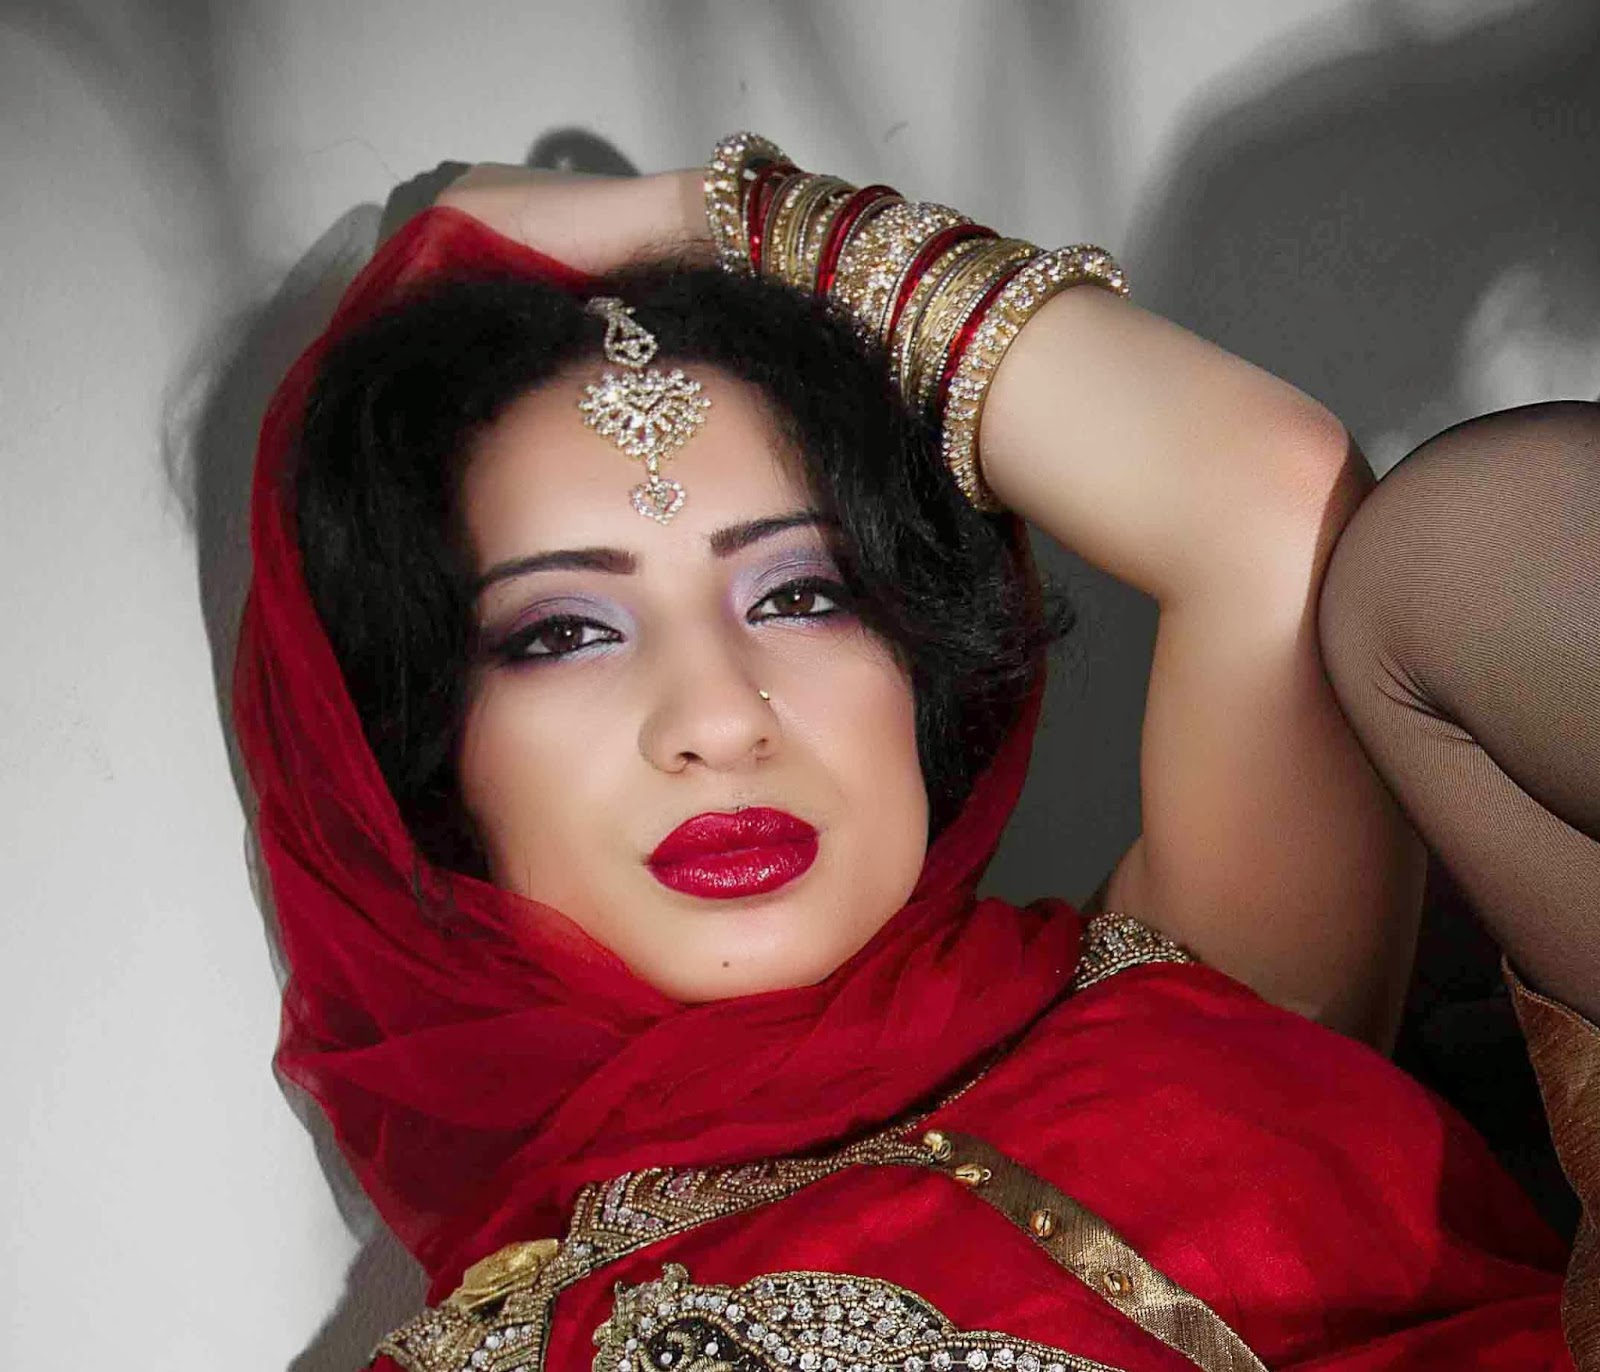 Indian Porn Star Shanti - Latest News On Indian Celebrities: Porn star Shanti Dynamite ...